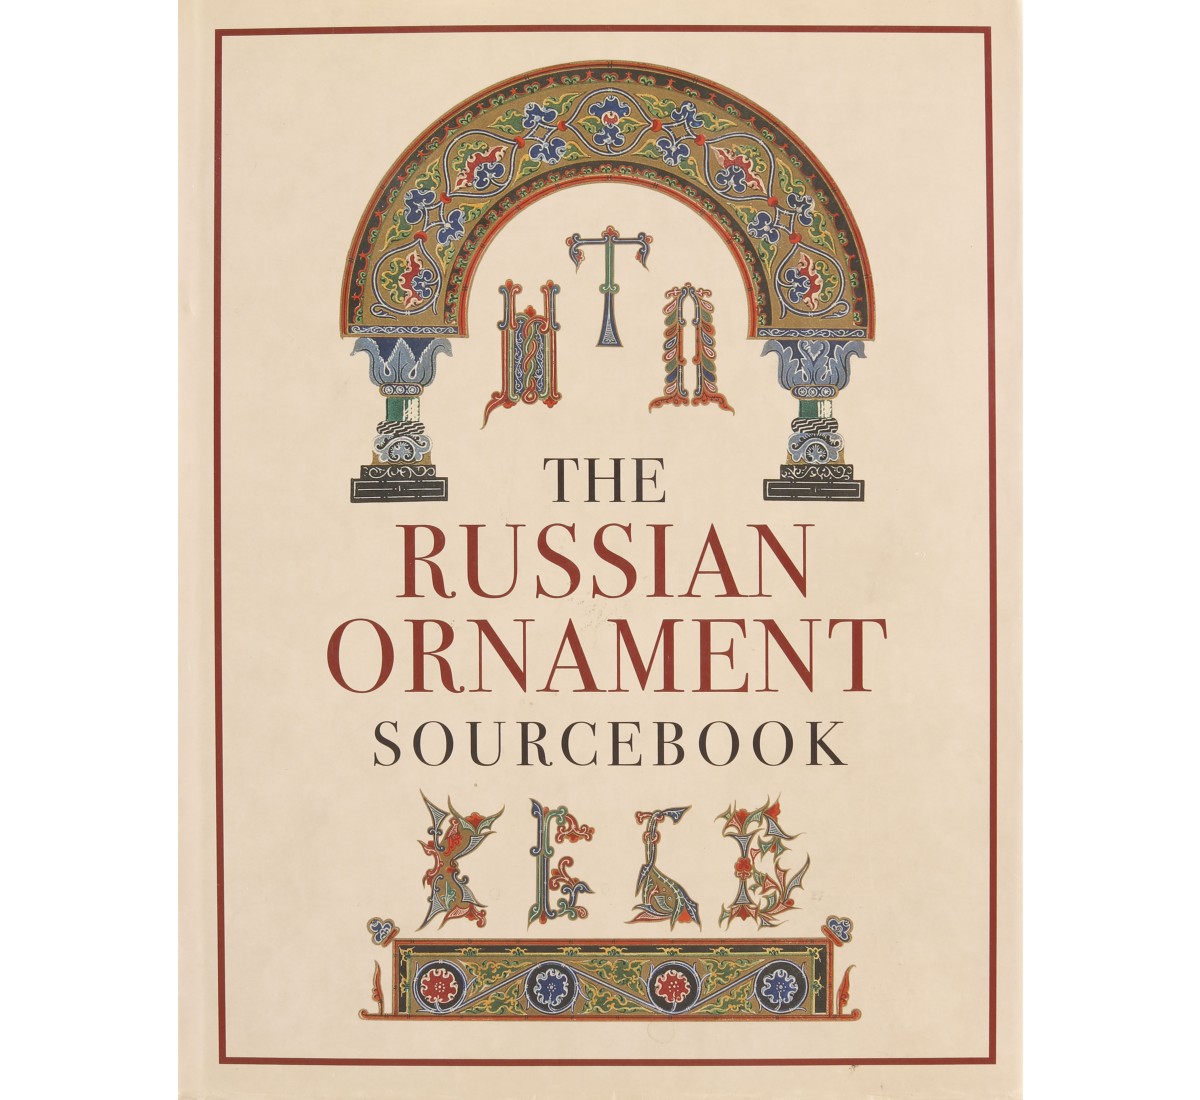 THE RUSSIAN ORNAMENT SOURCE BOOK